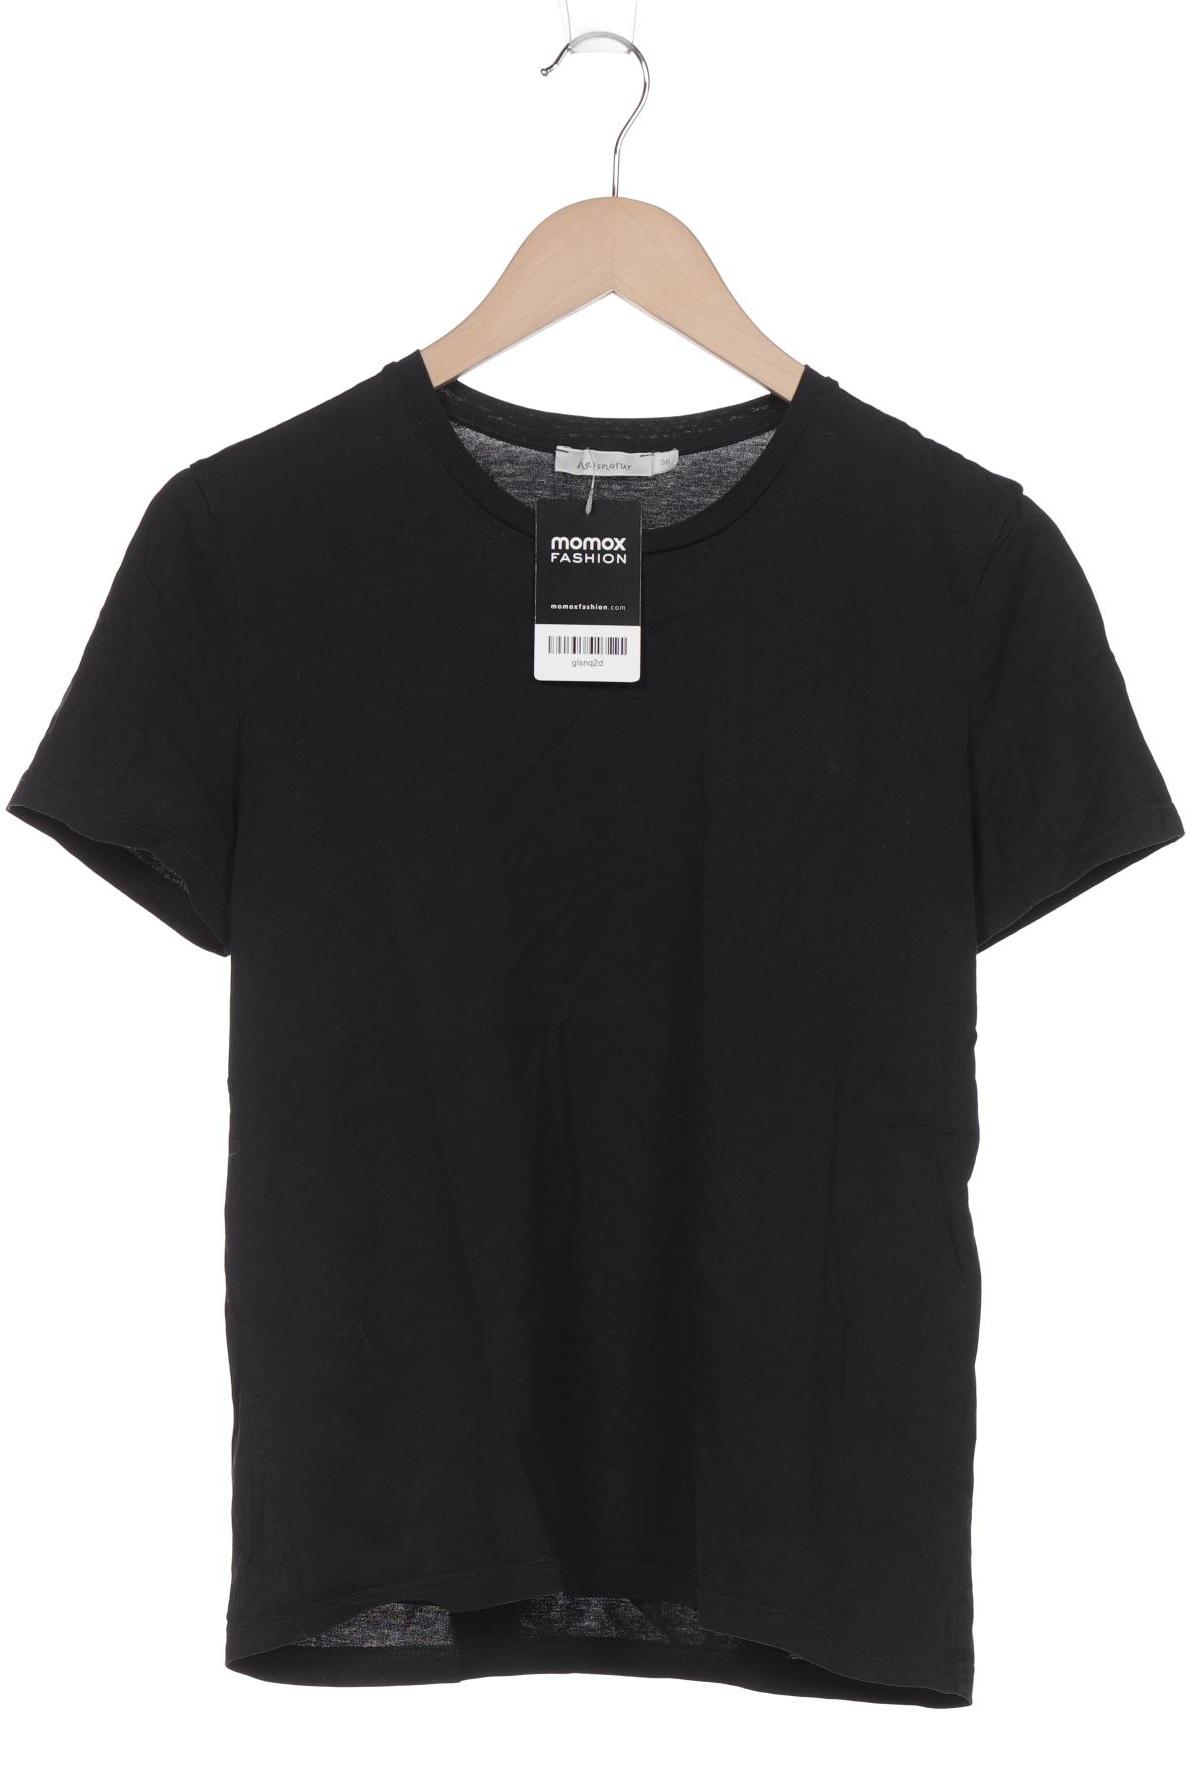 hessnatur Damen T-Shirt, schwarz, Gr. 36 von hessnatur